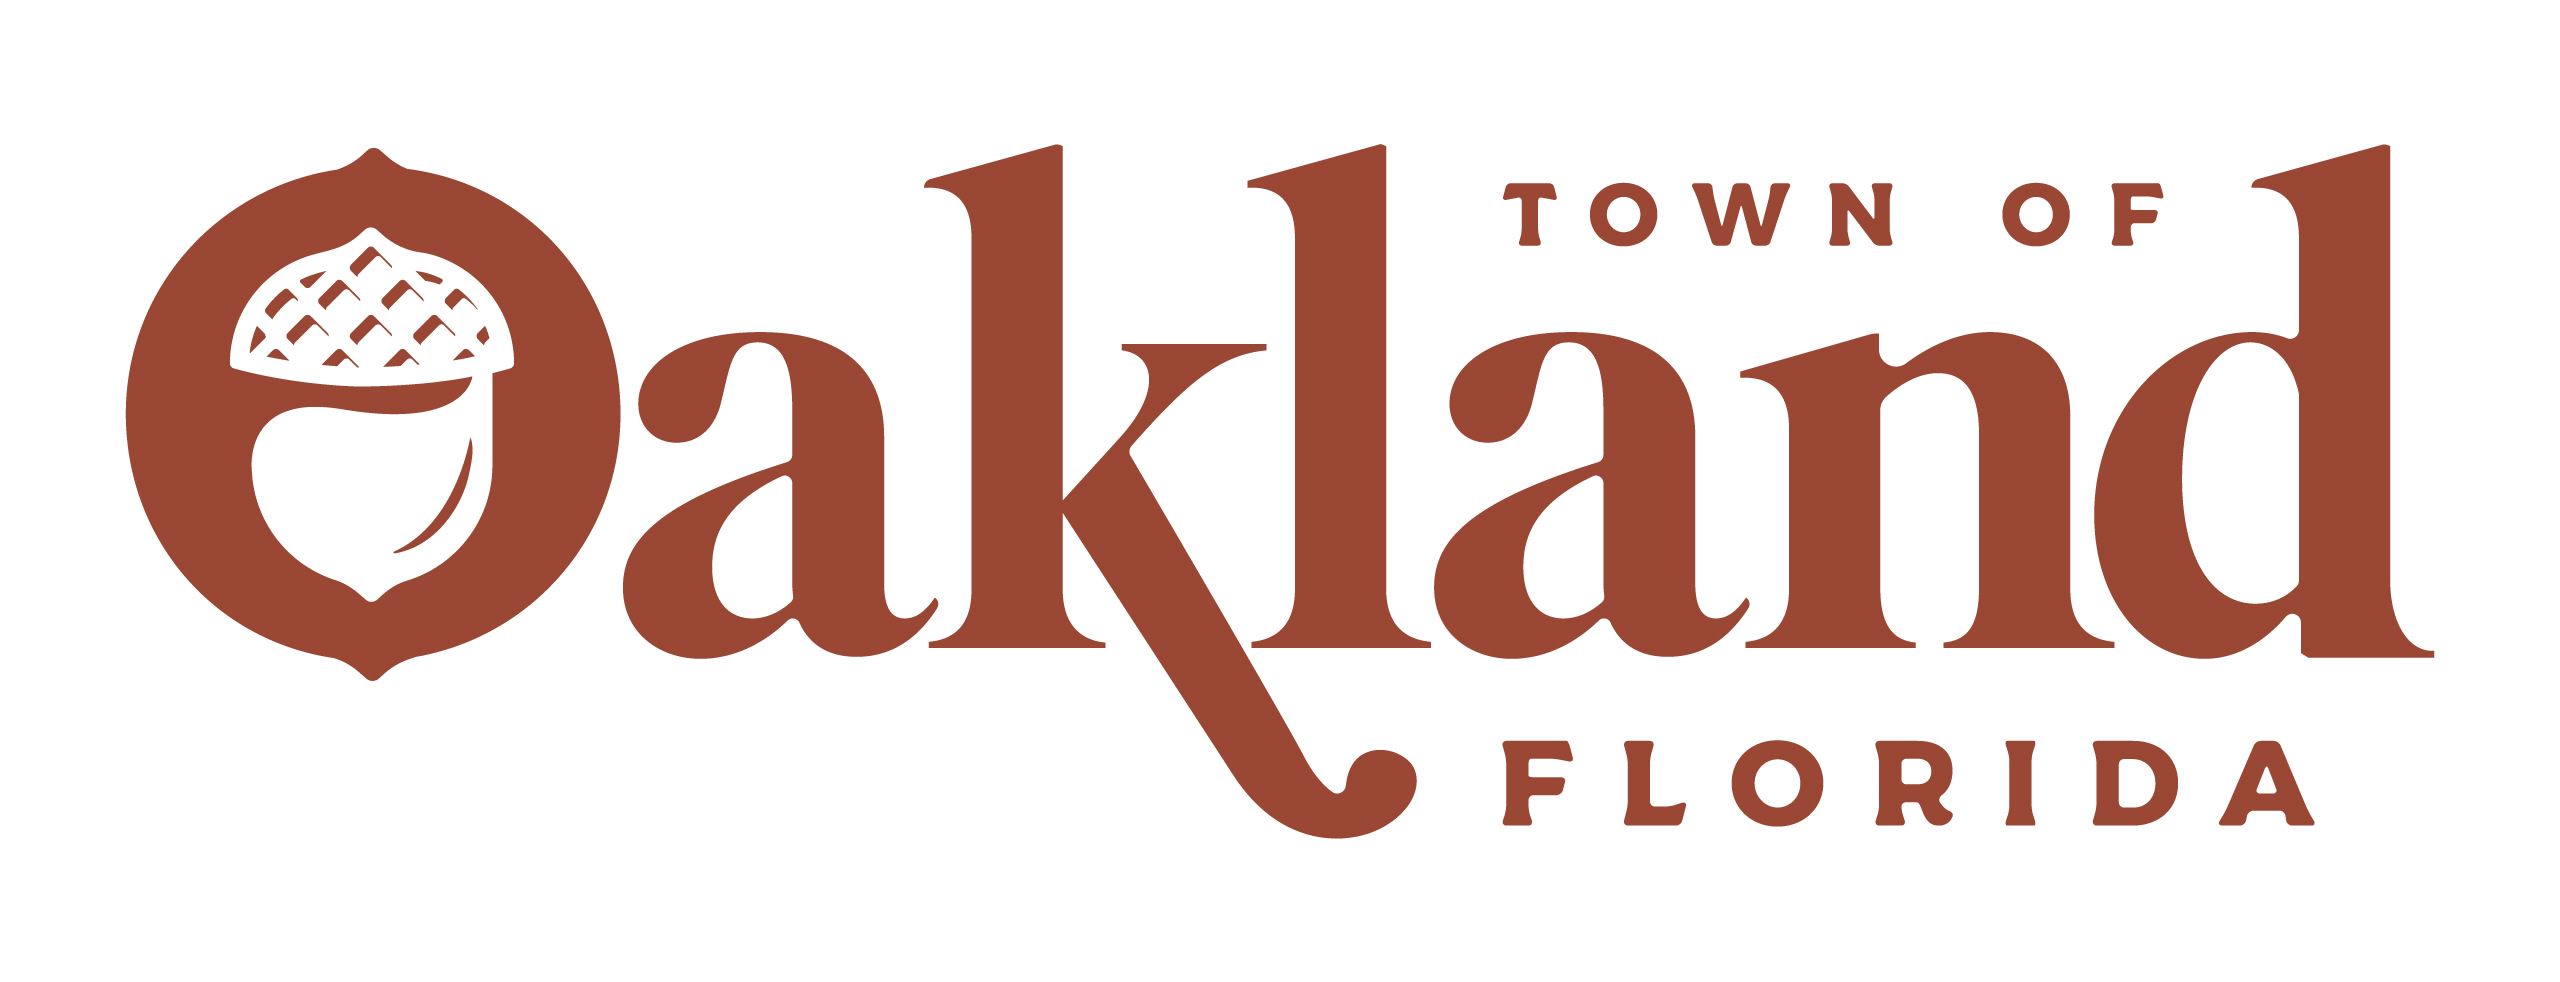 Oakland logo